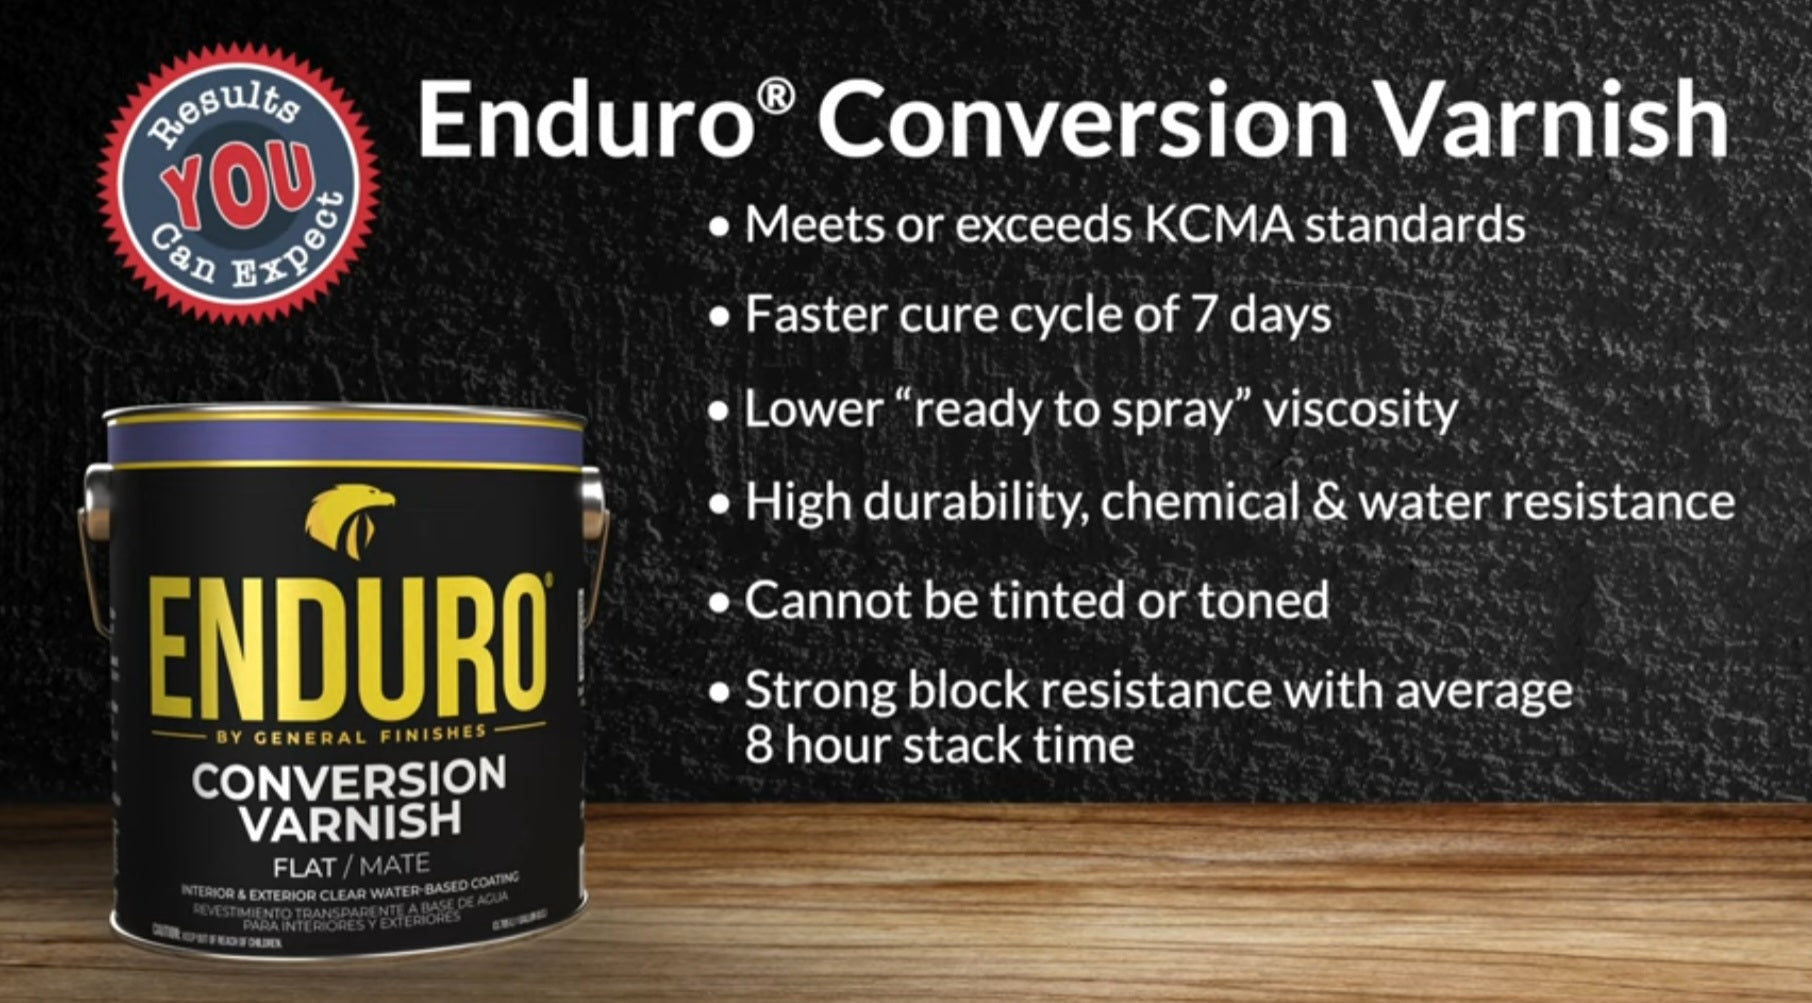 Enduro Pro Conversion Varnish Properties